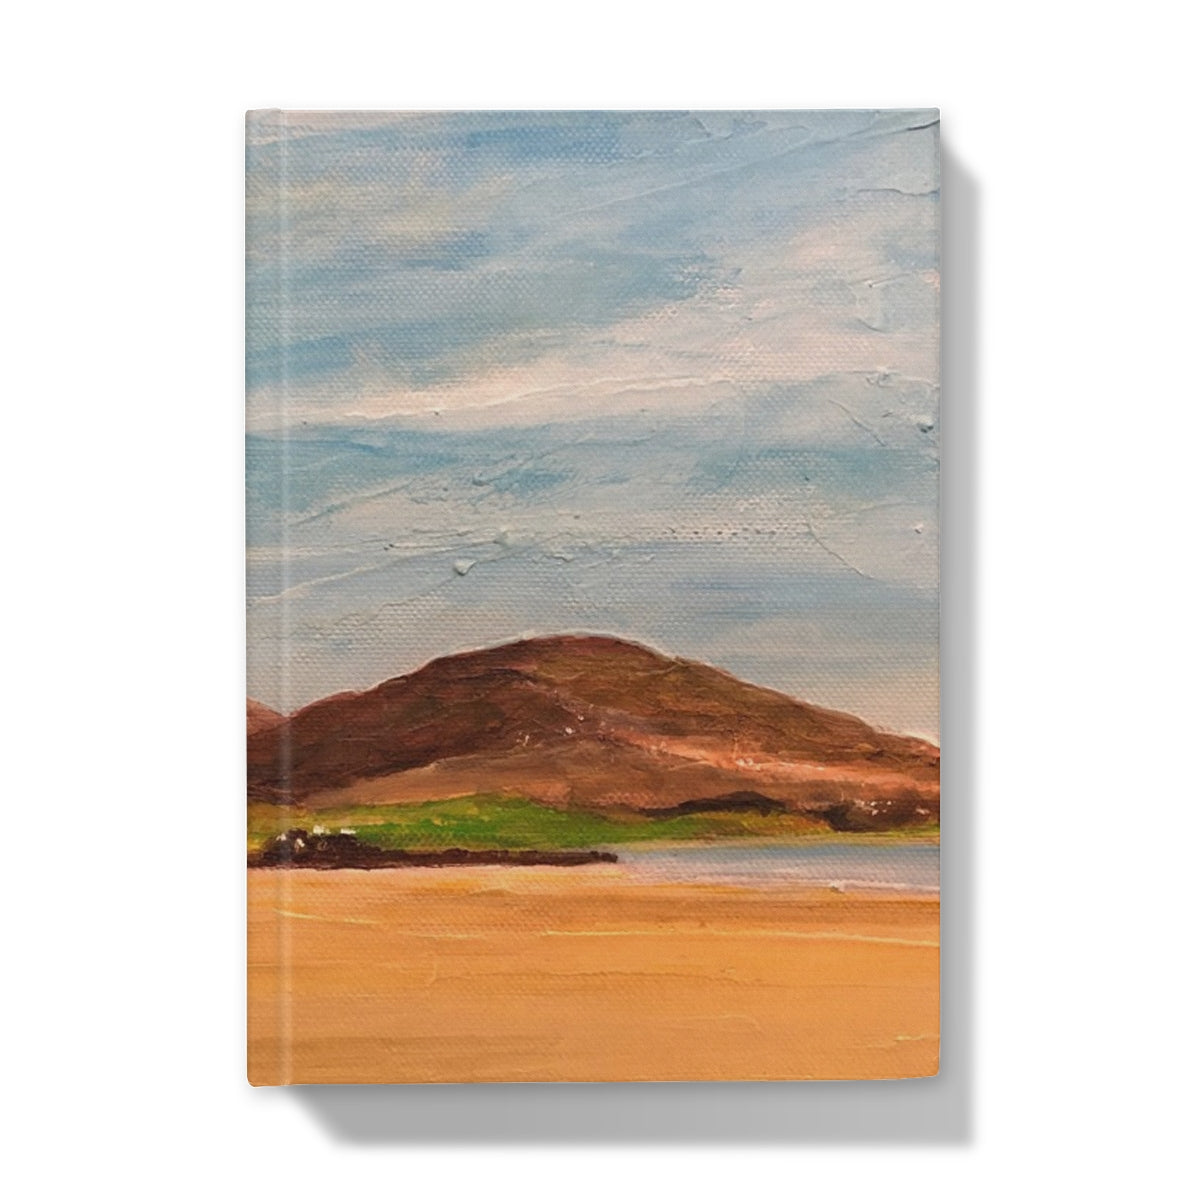 Uig Sands Lewis Art Gifts Hardback Journal-Journals & Notebooks-Hebridean Islands Art Gallery-5"x7"-Plain-Paintings, Prints, Homeware, Art Gifts From Scotland By Scottish Artist Kevin Hunter